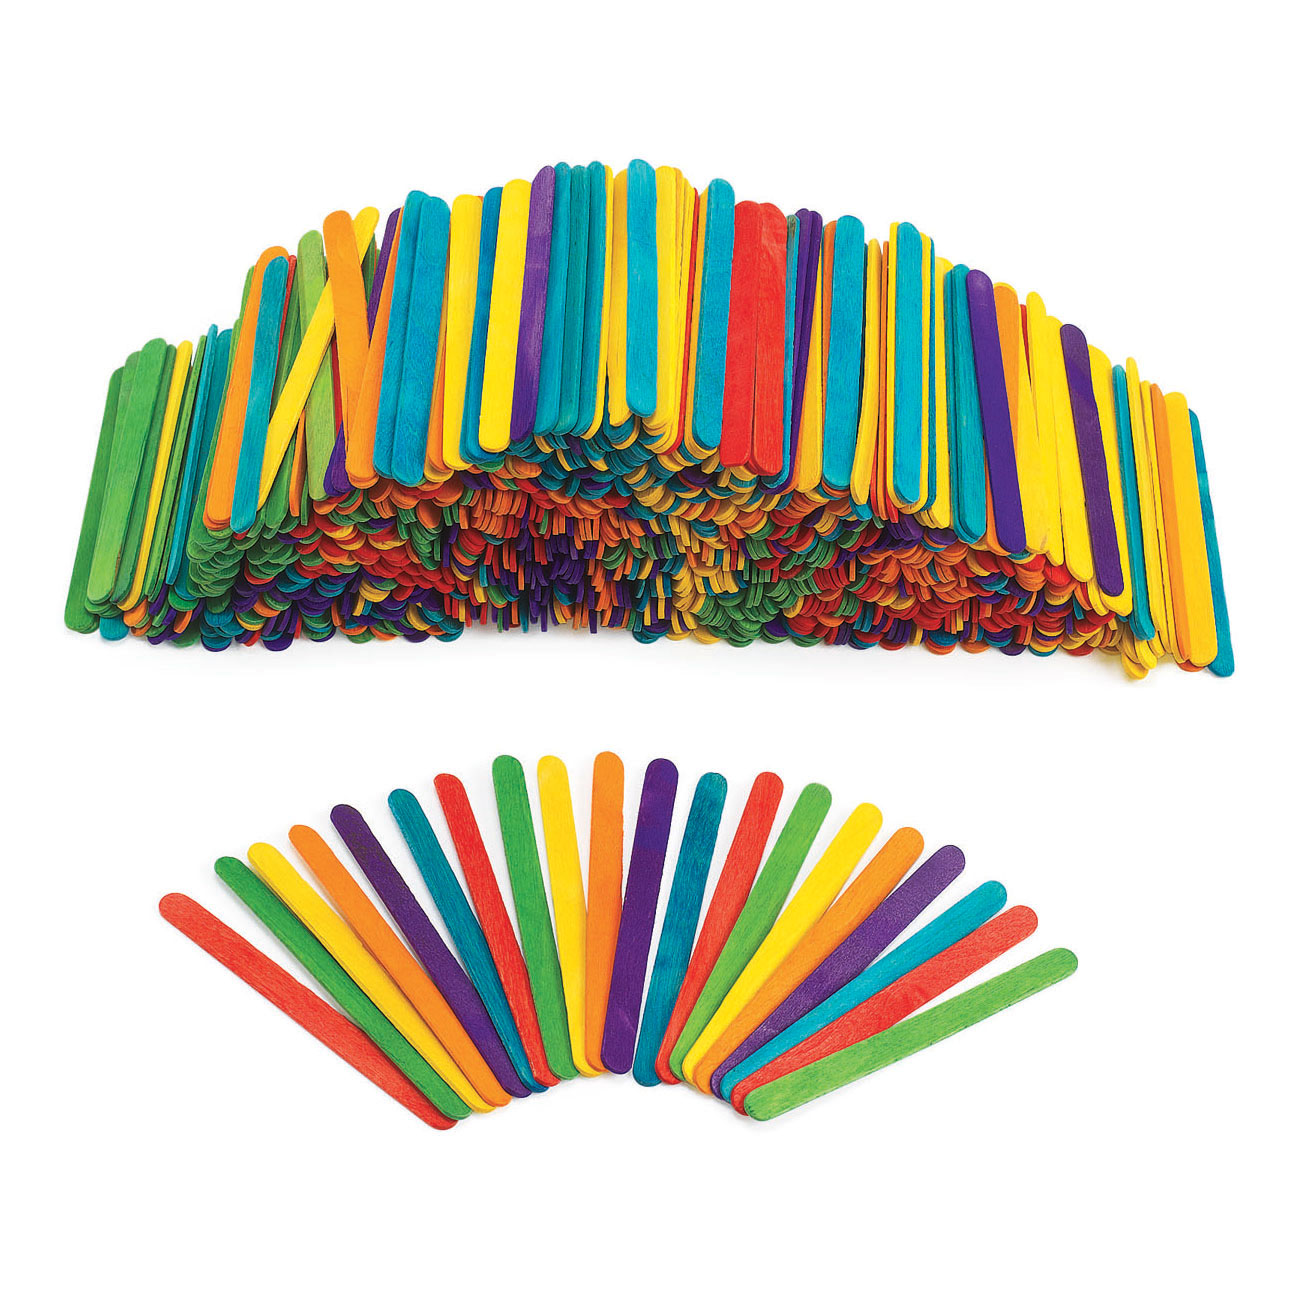 Colorful Wooden Craft Sticks 200Pcs Popsicle Sticks for Crafts